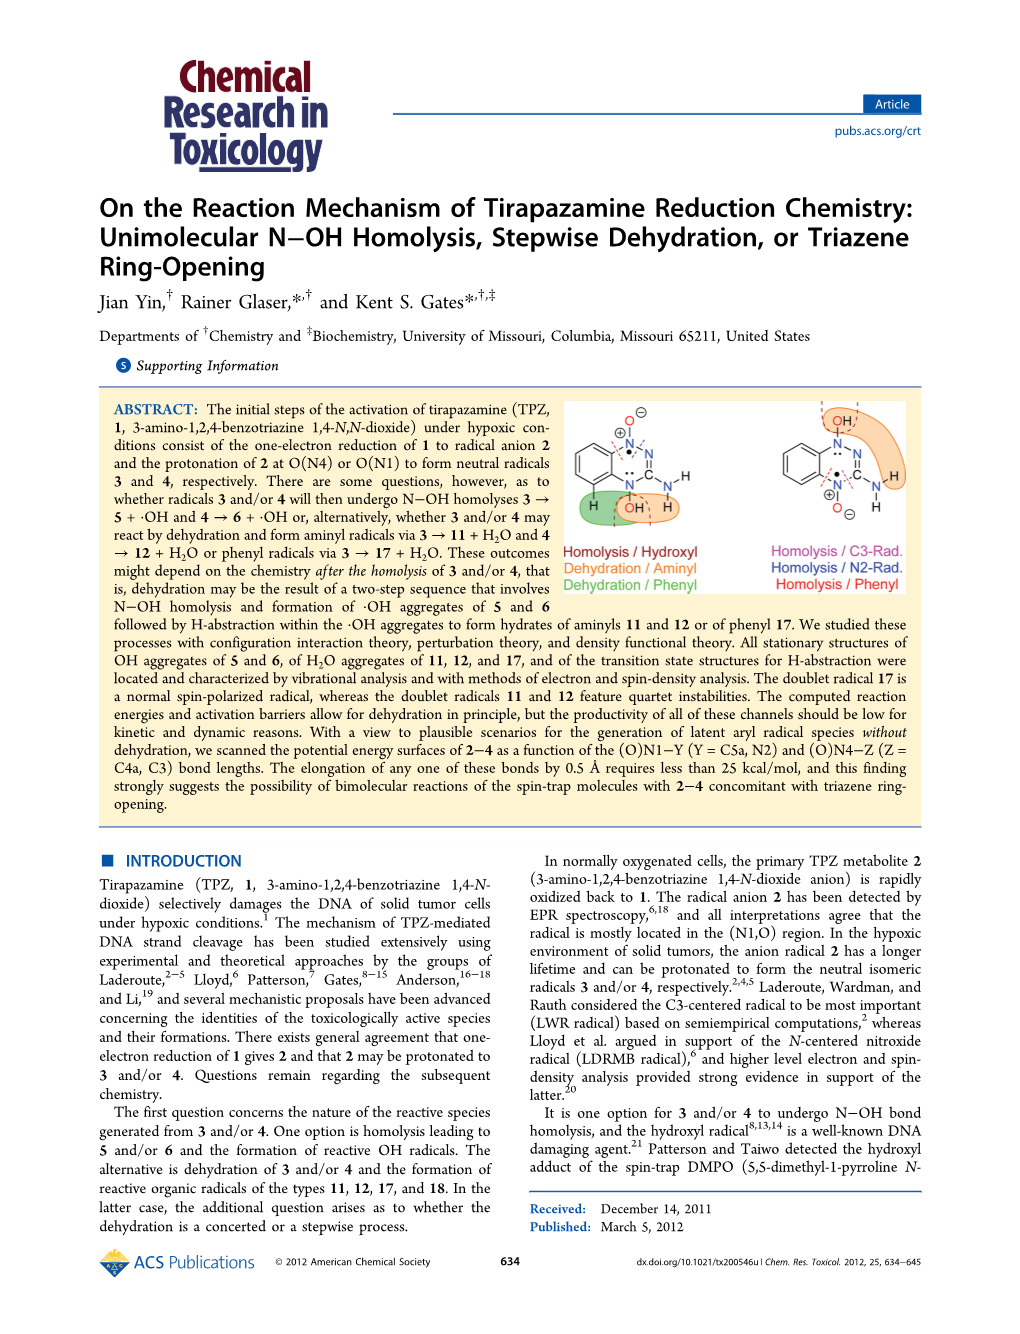 Unimolecular N−OH Homolysis, Stepwise Dehydration, Or Triazene Ring-Opening Jian Yin,† Rainer Glaser,*,† and Kent S